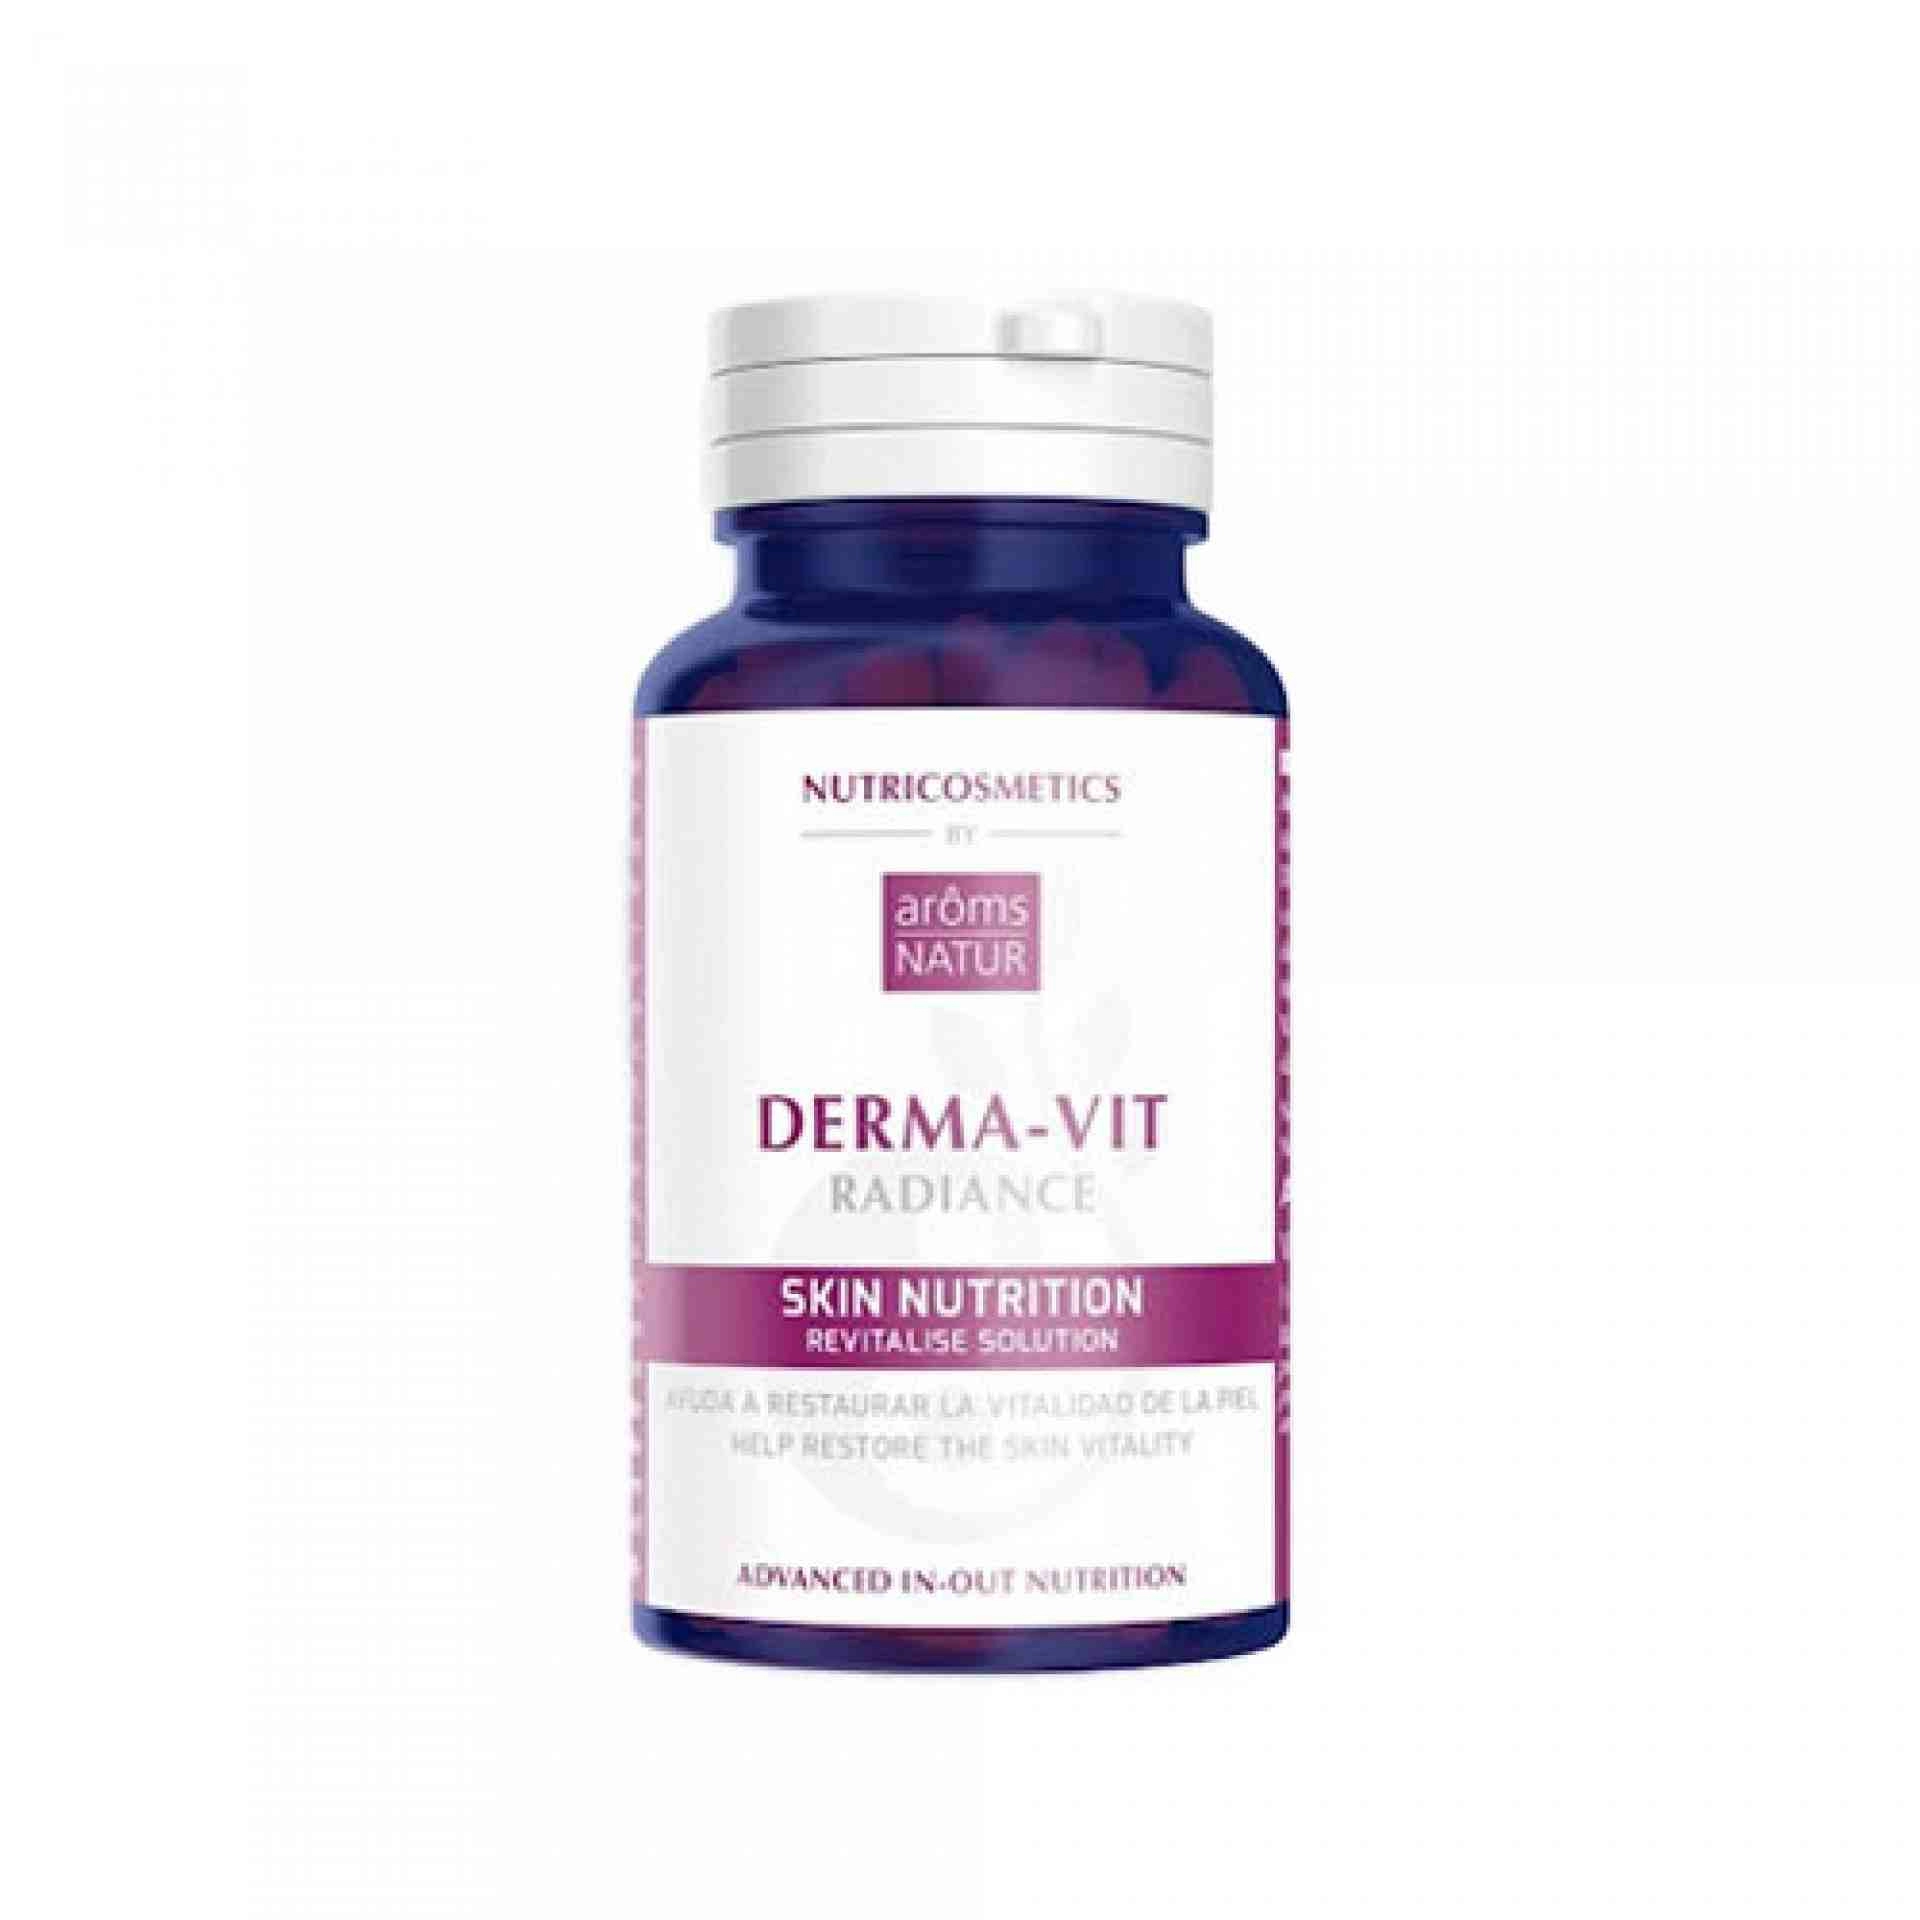 Derma-Vit Radiance 60 Cápsulas | Complemento Multivitamínico - Nutricosméticos - Arôms Natur ®